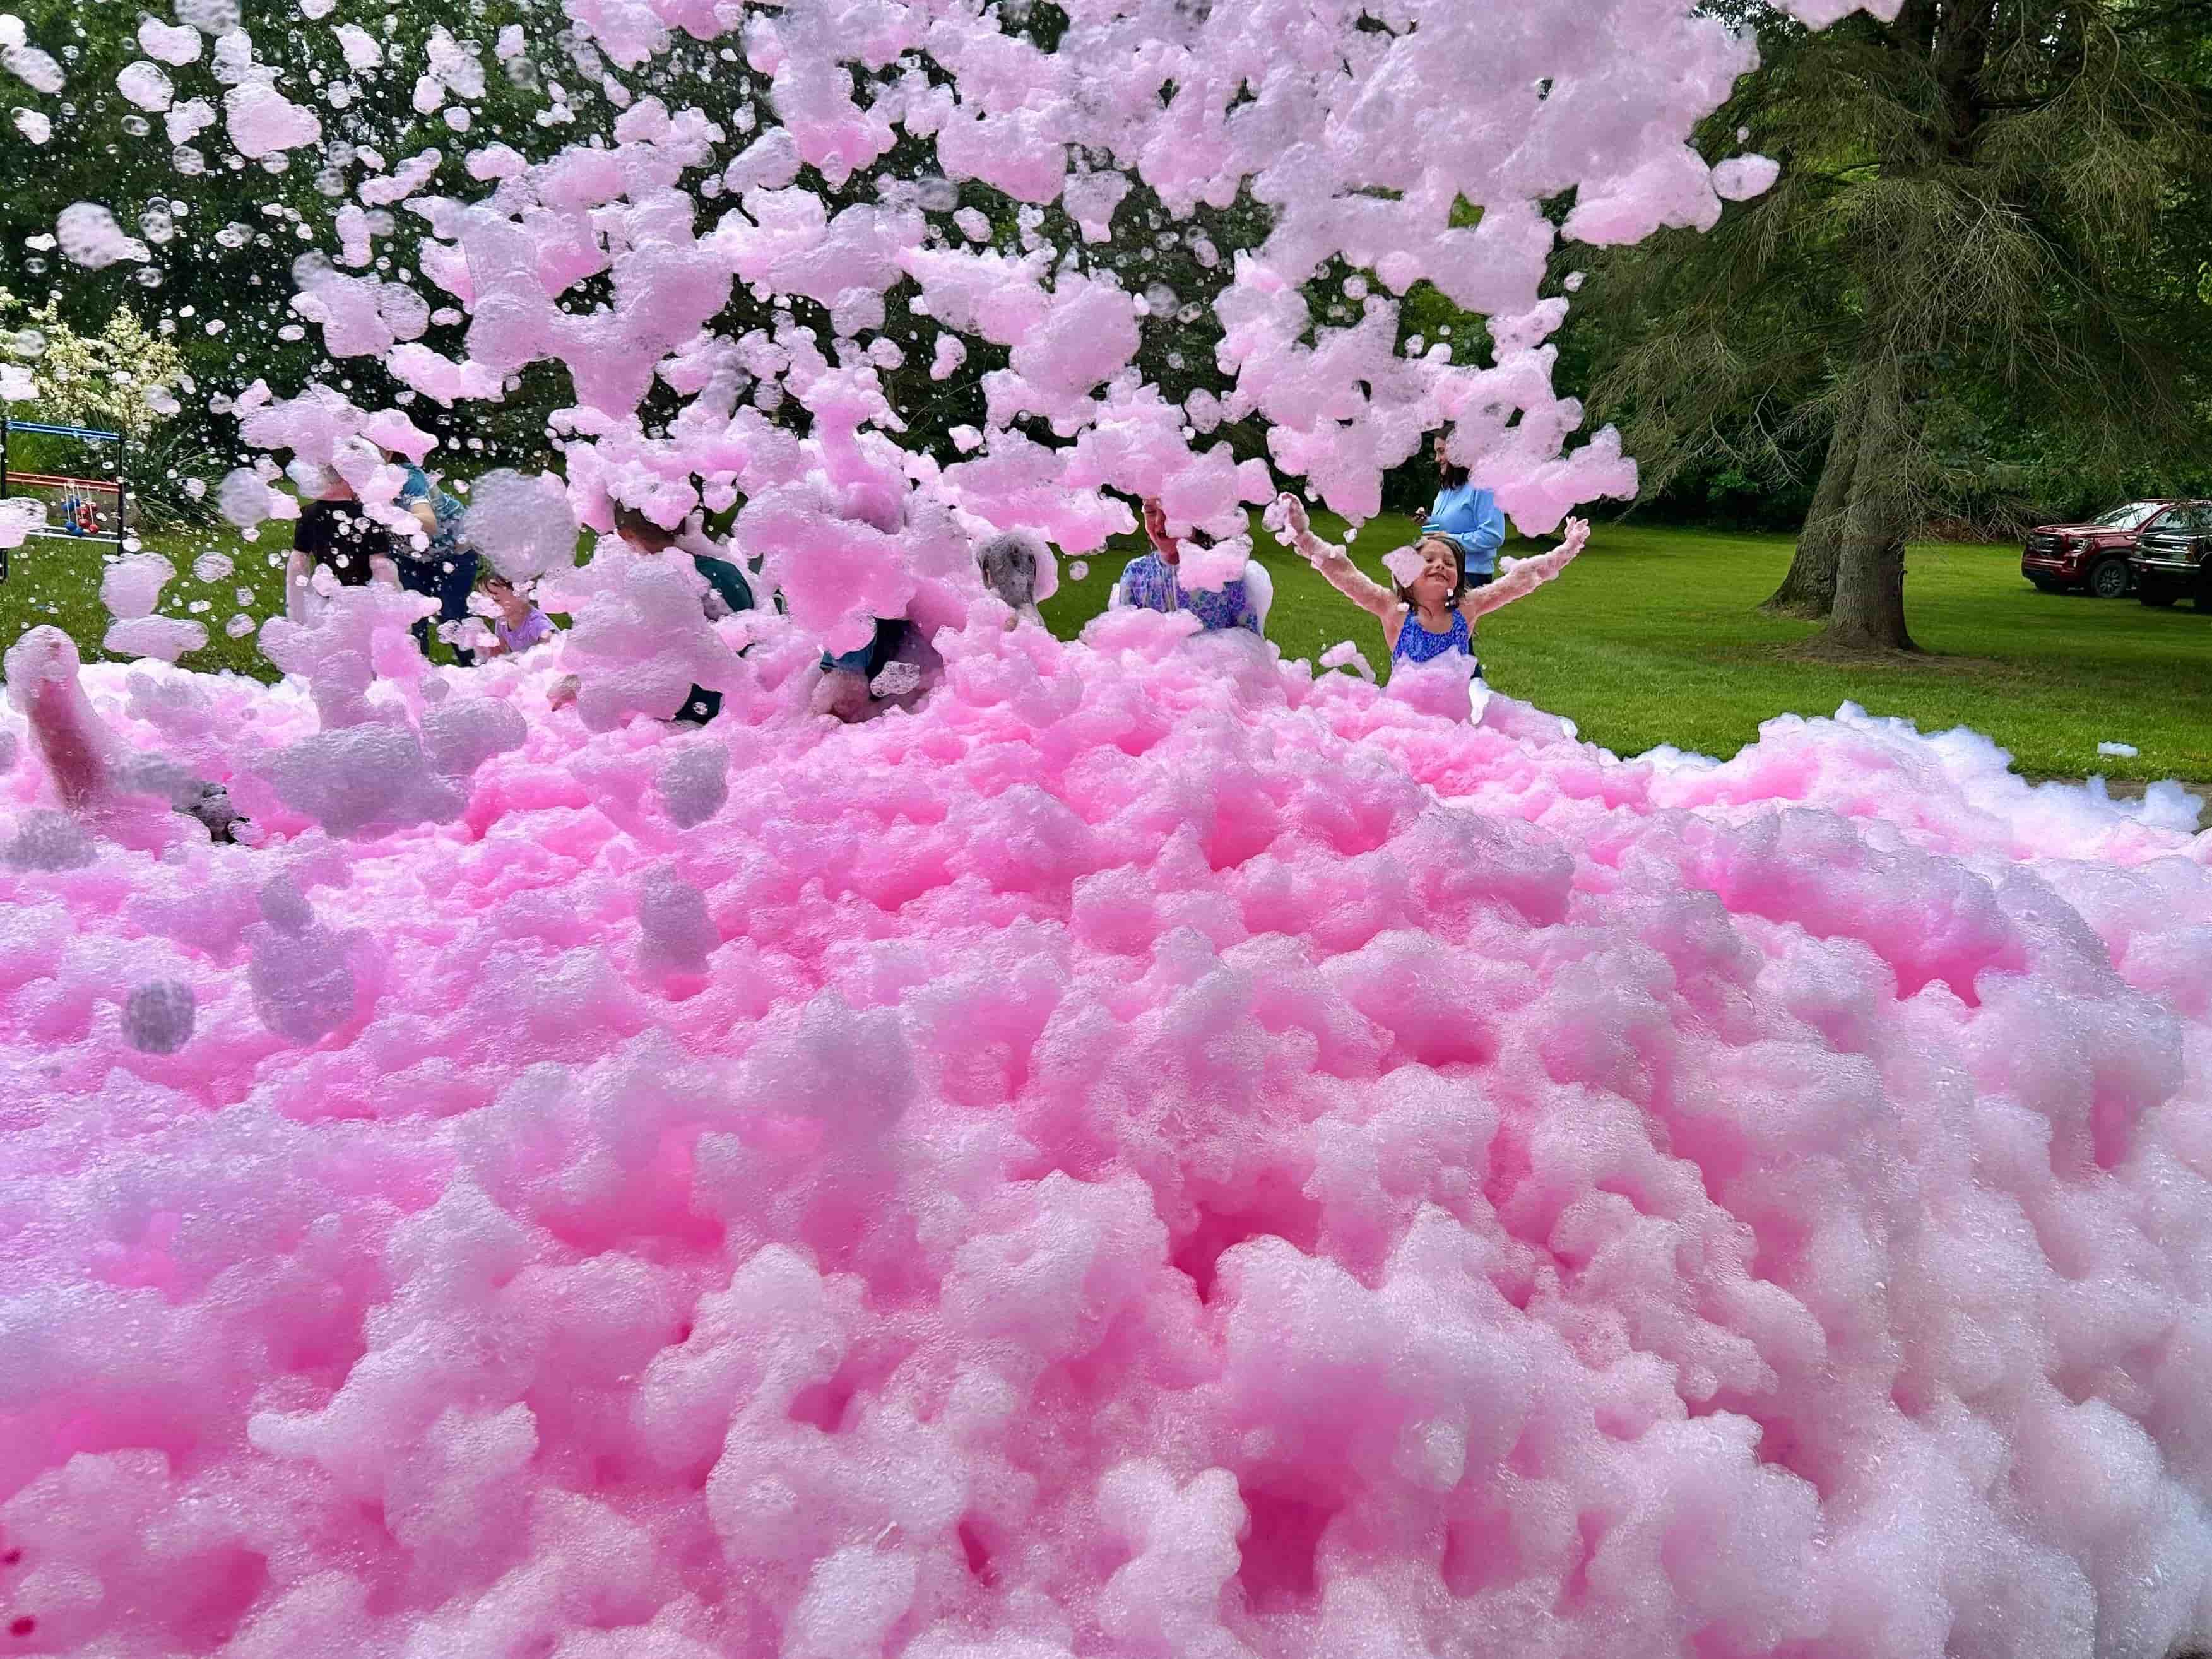 Big outdoor foam party in Conshohocken, PA.